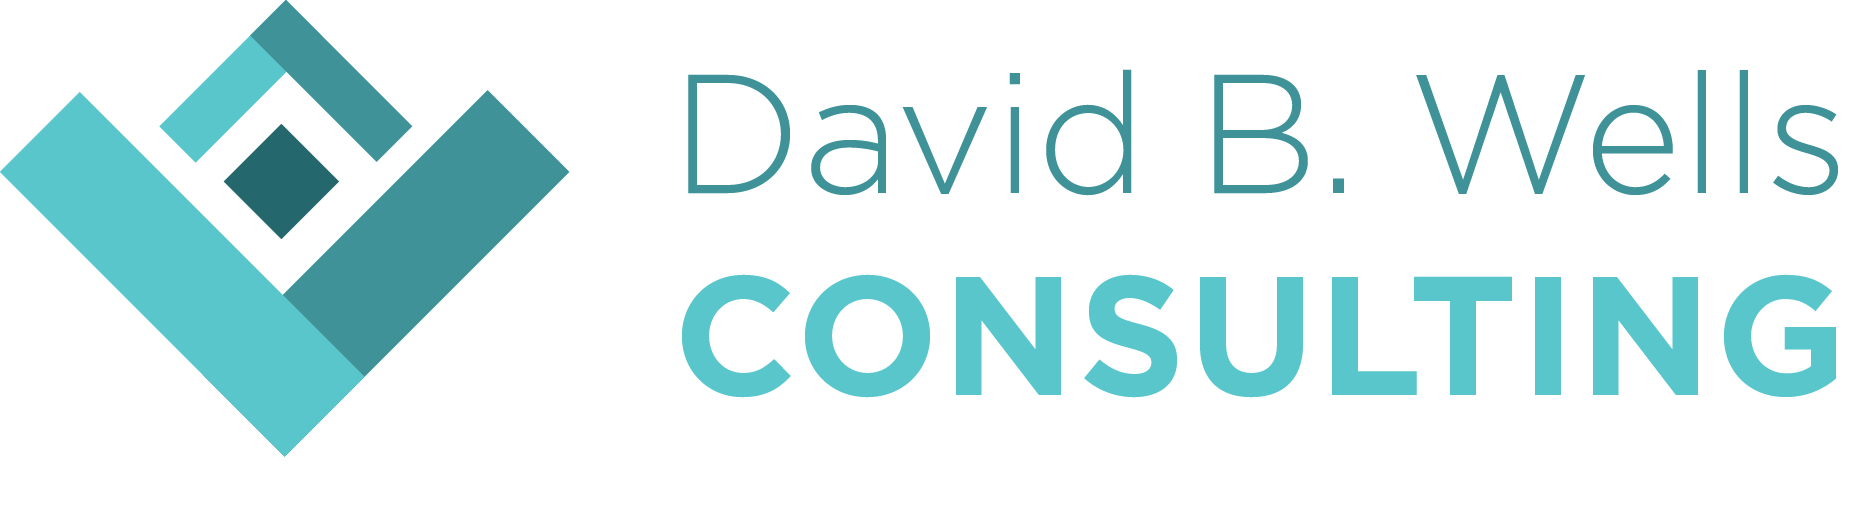 David B. Wells Consulting